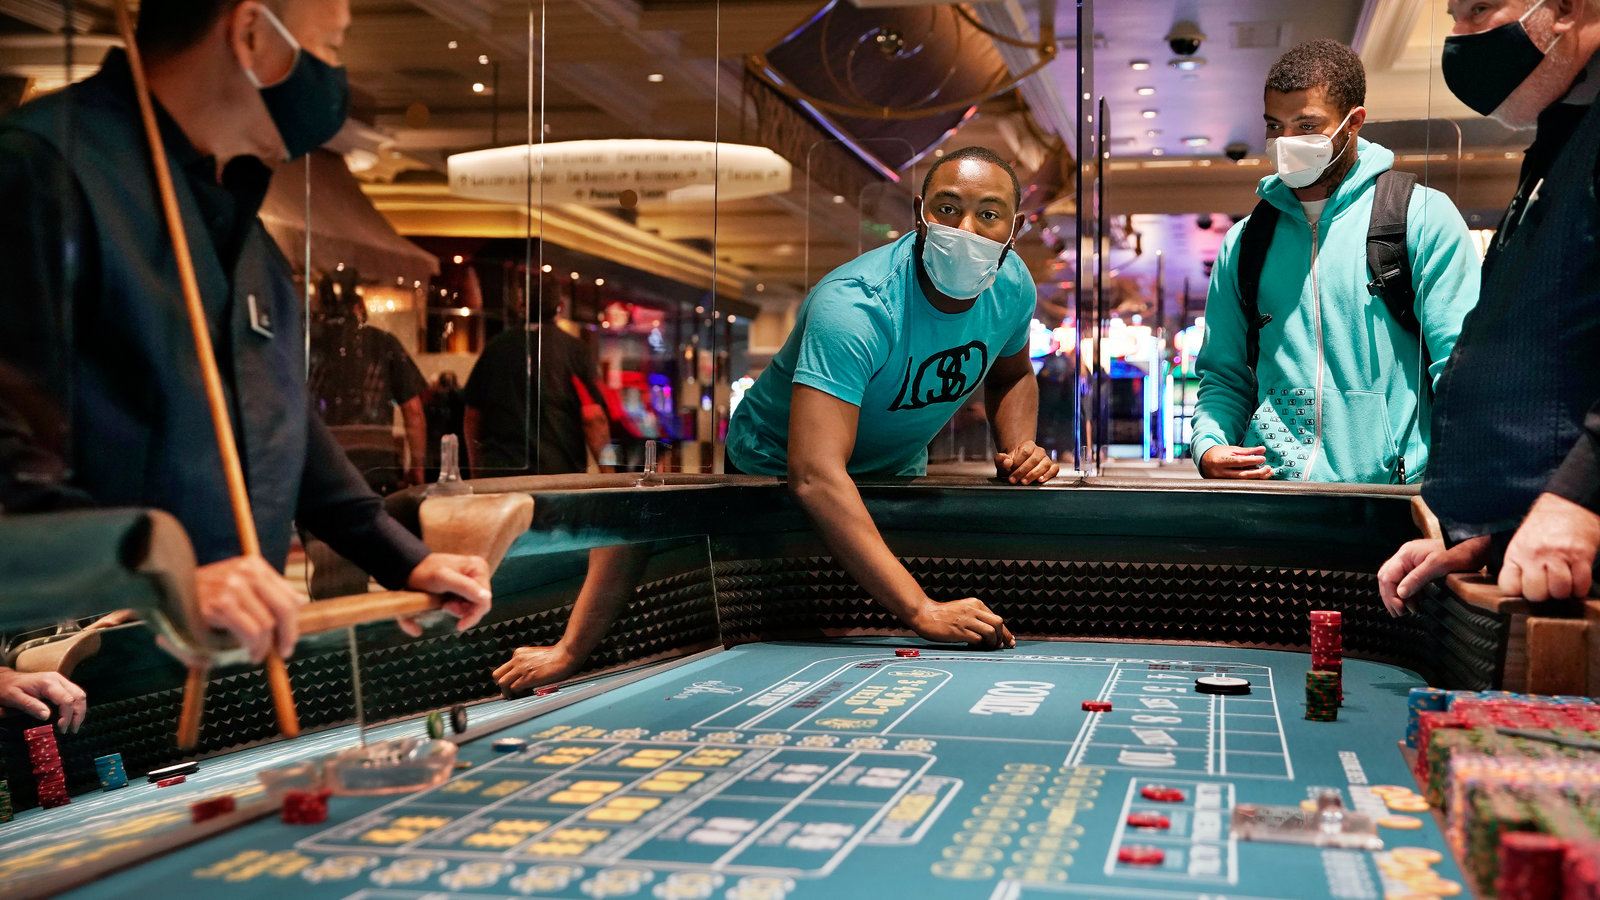 Morongo casino age limit to gamble stocks